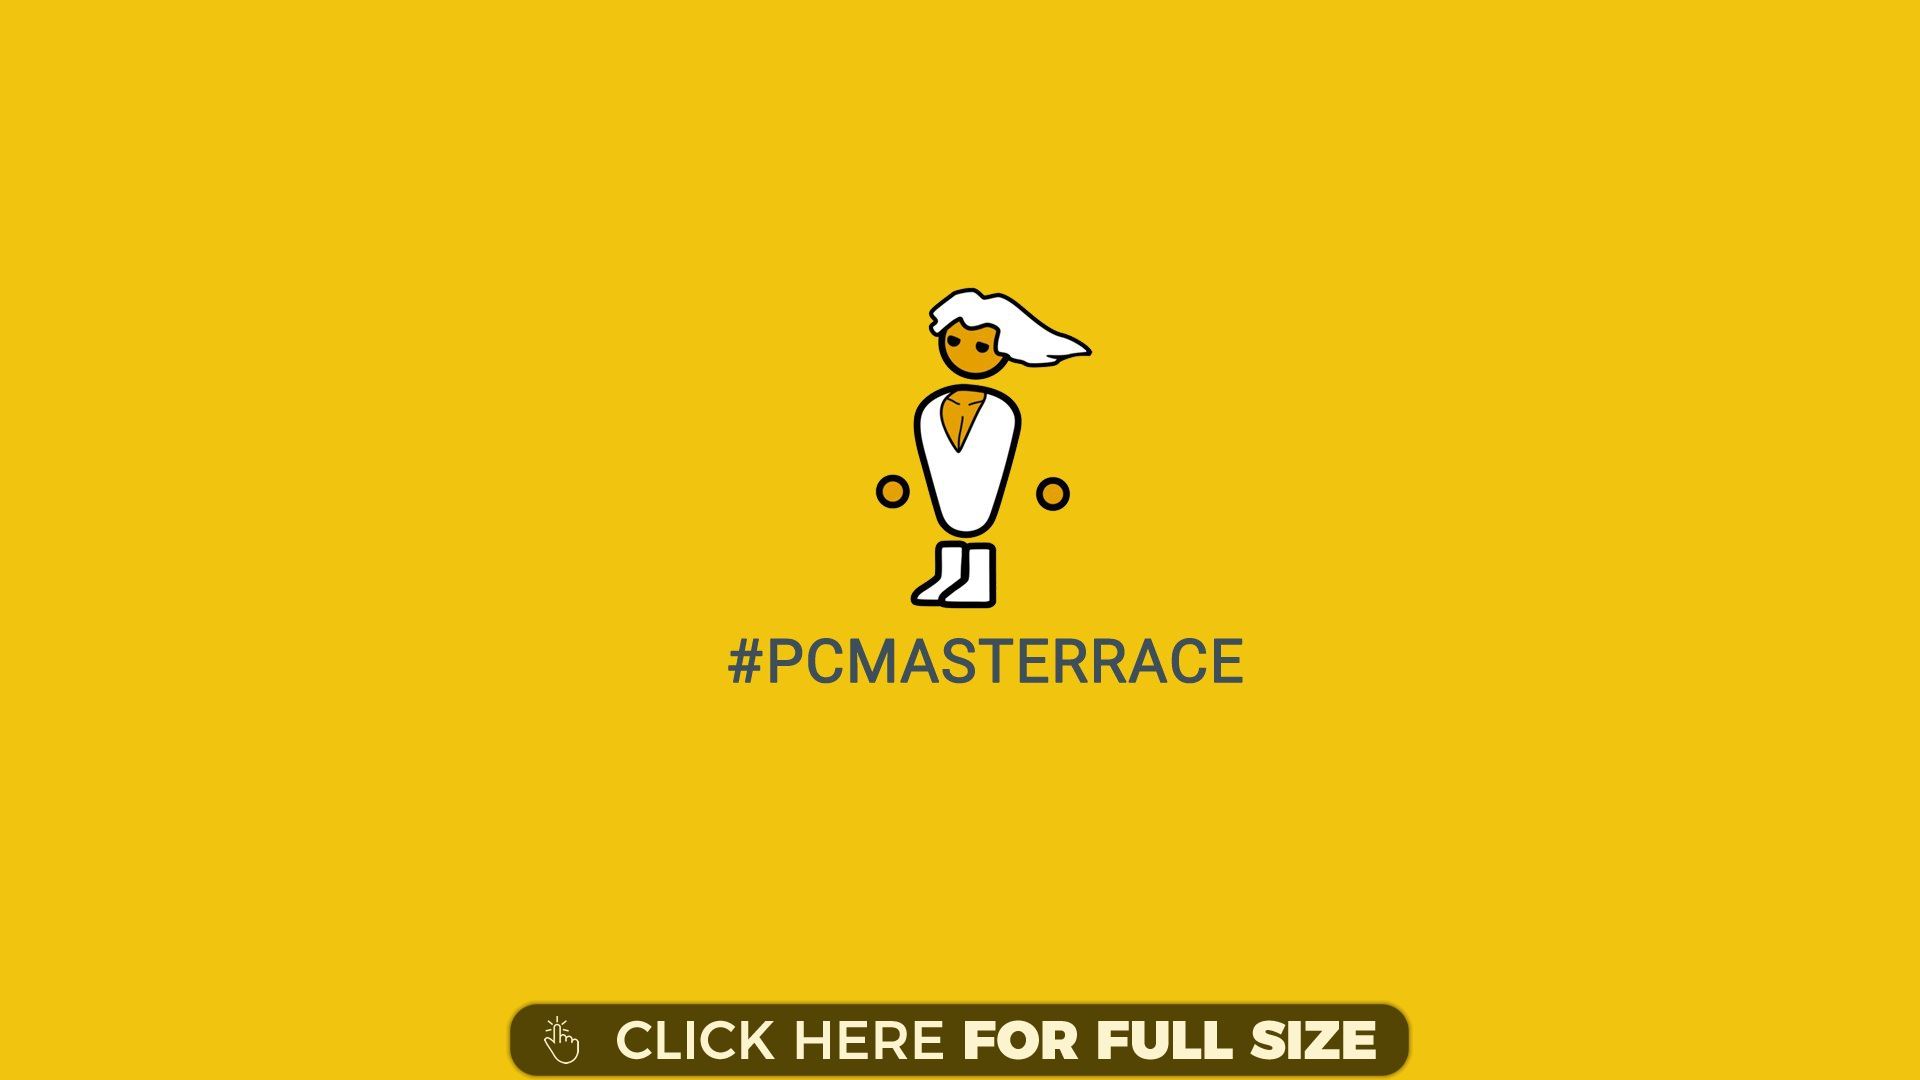 Pics For Pc Master Race Wallpaper